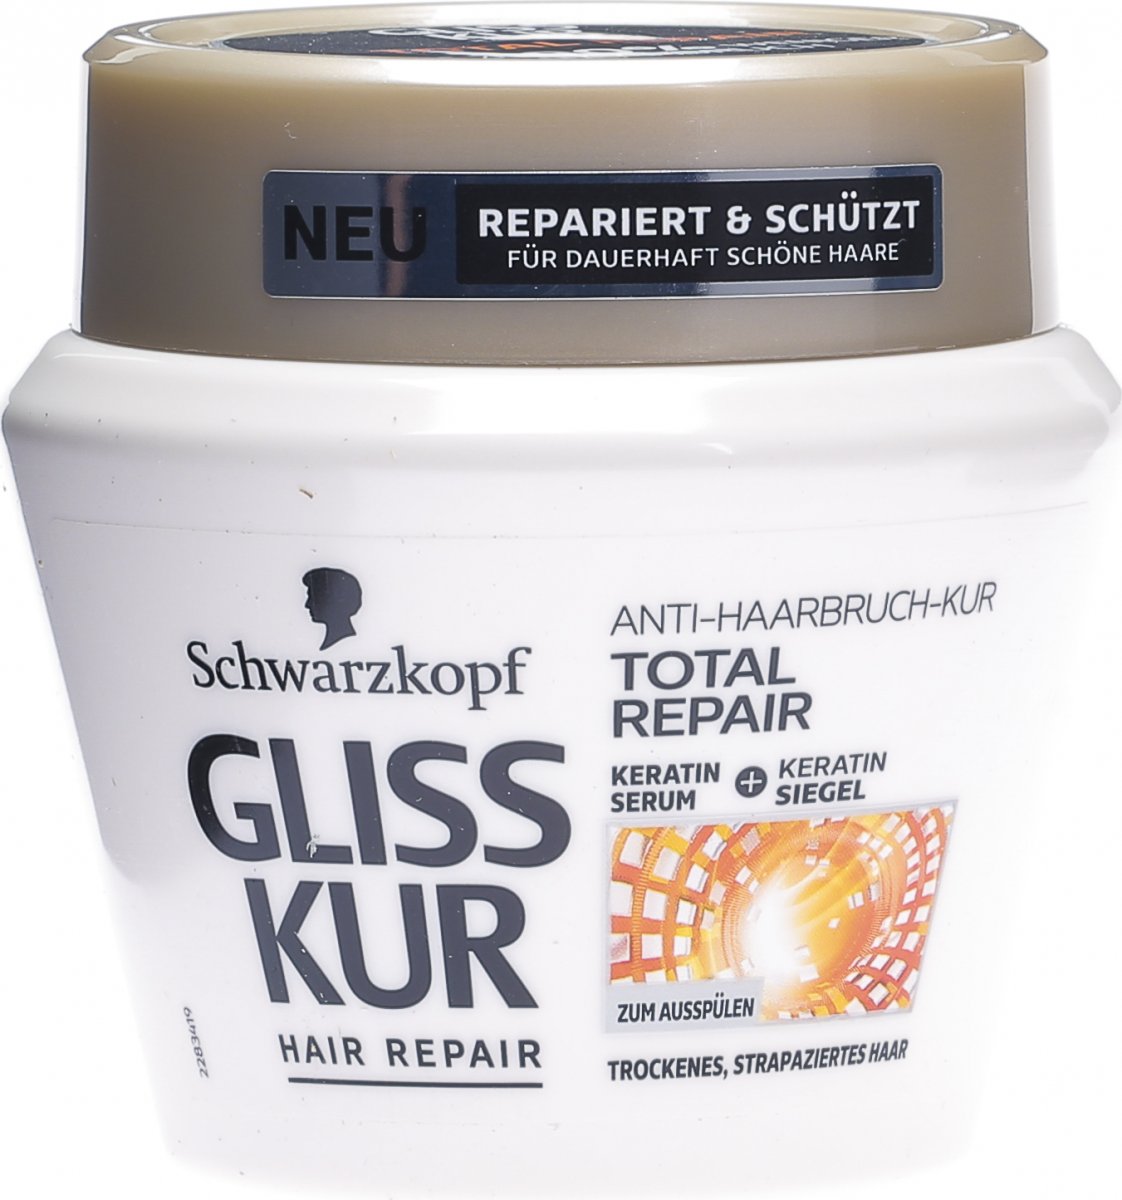 Gliss Kur Total Repair Anti Haarbruch Kur 300ml In Der Adler Apotheke